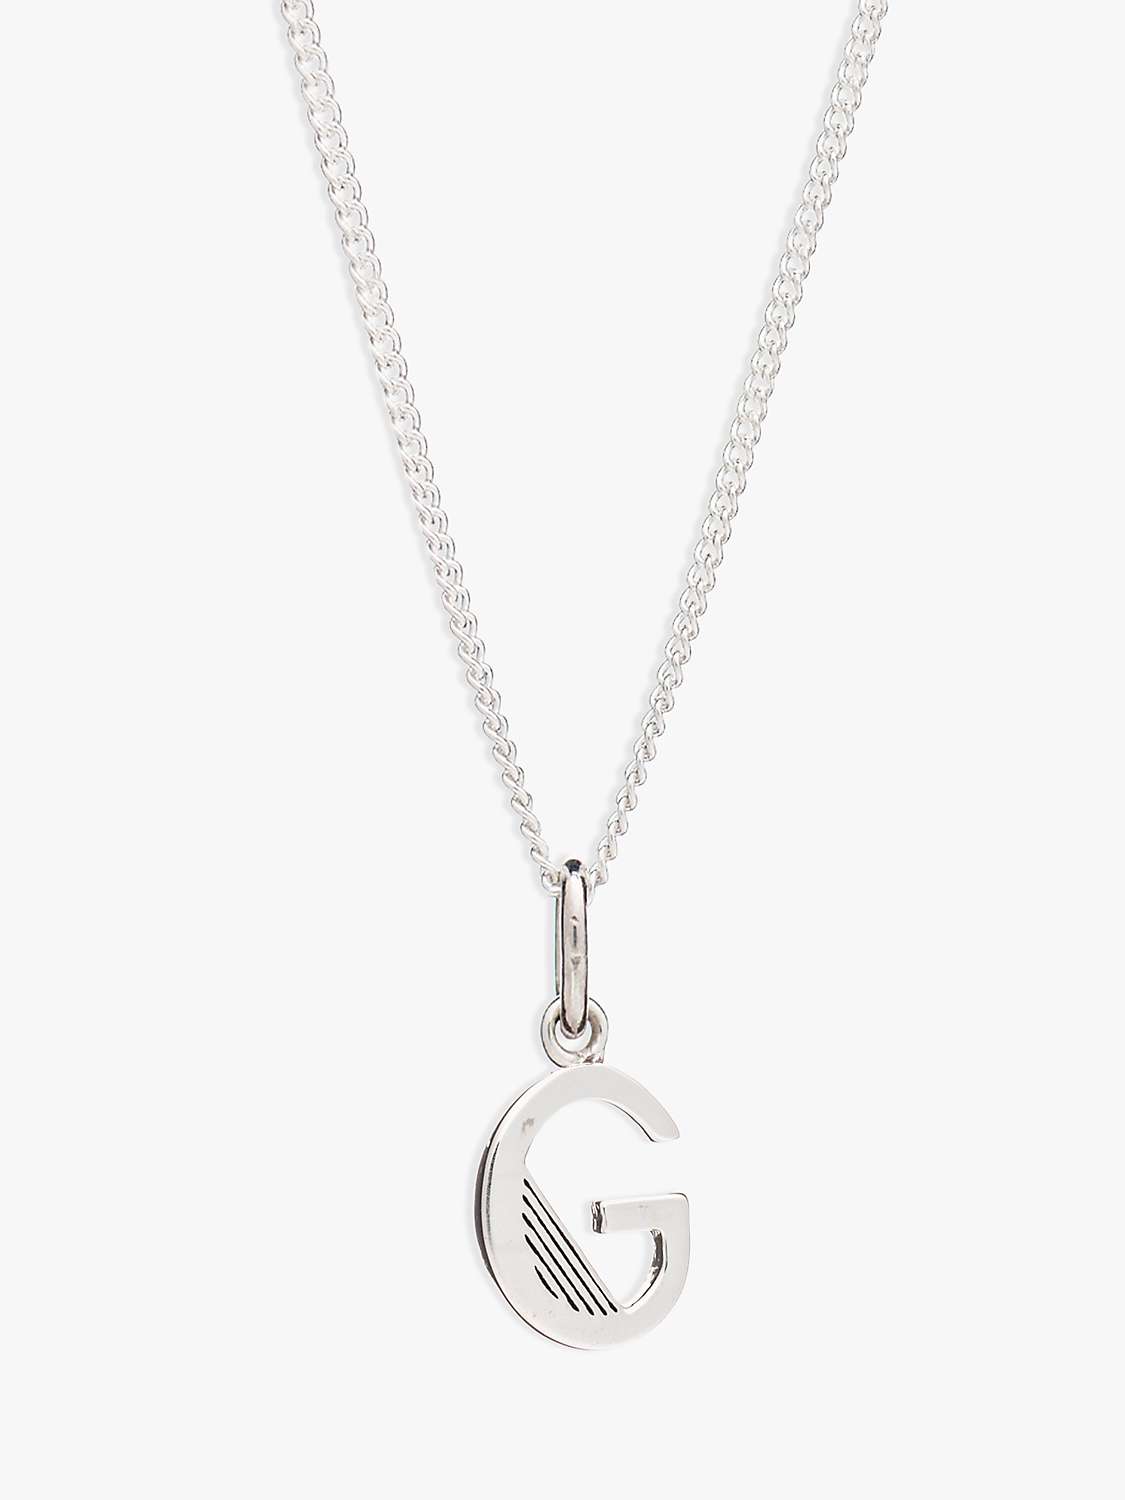 Buy Rachel Jackson London Initial Necklace, Silver Online at johnlewis.com